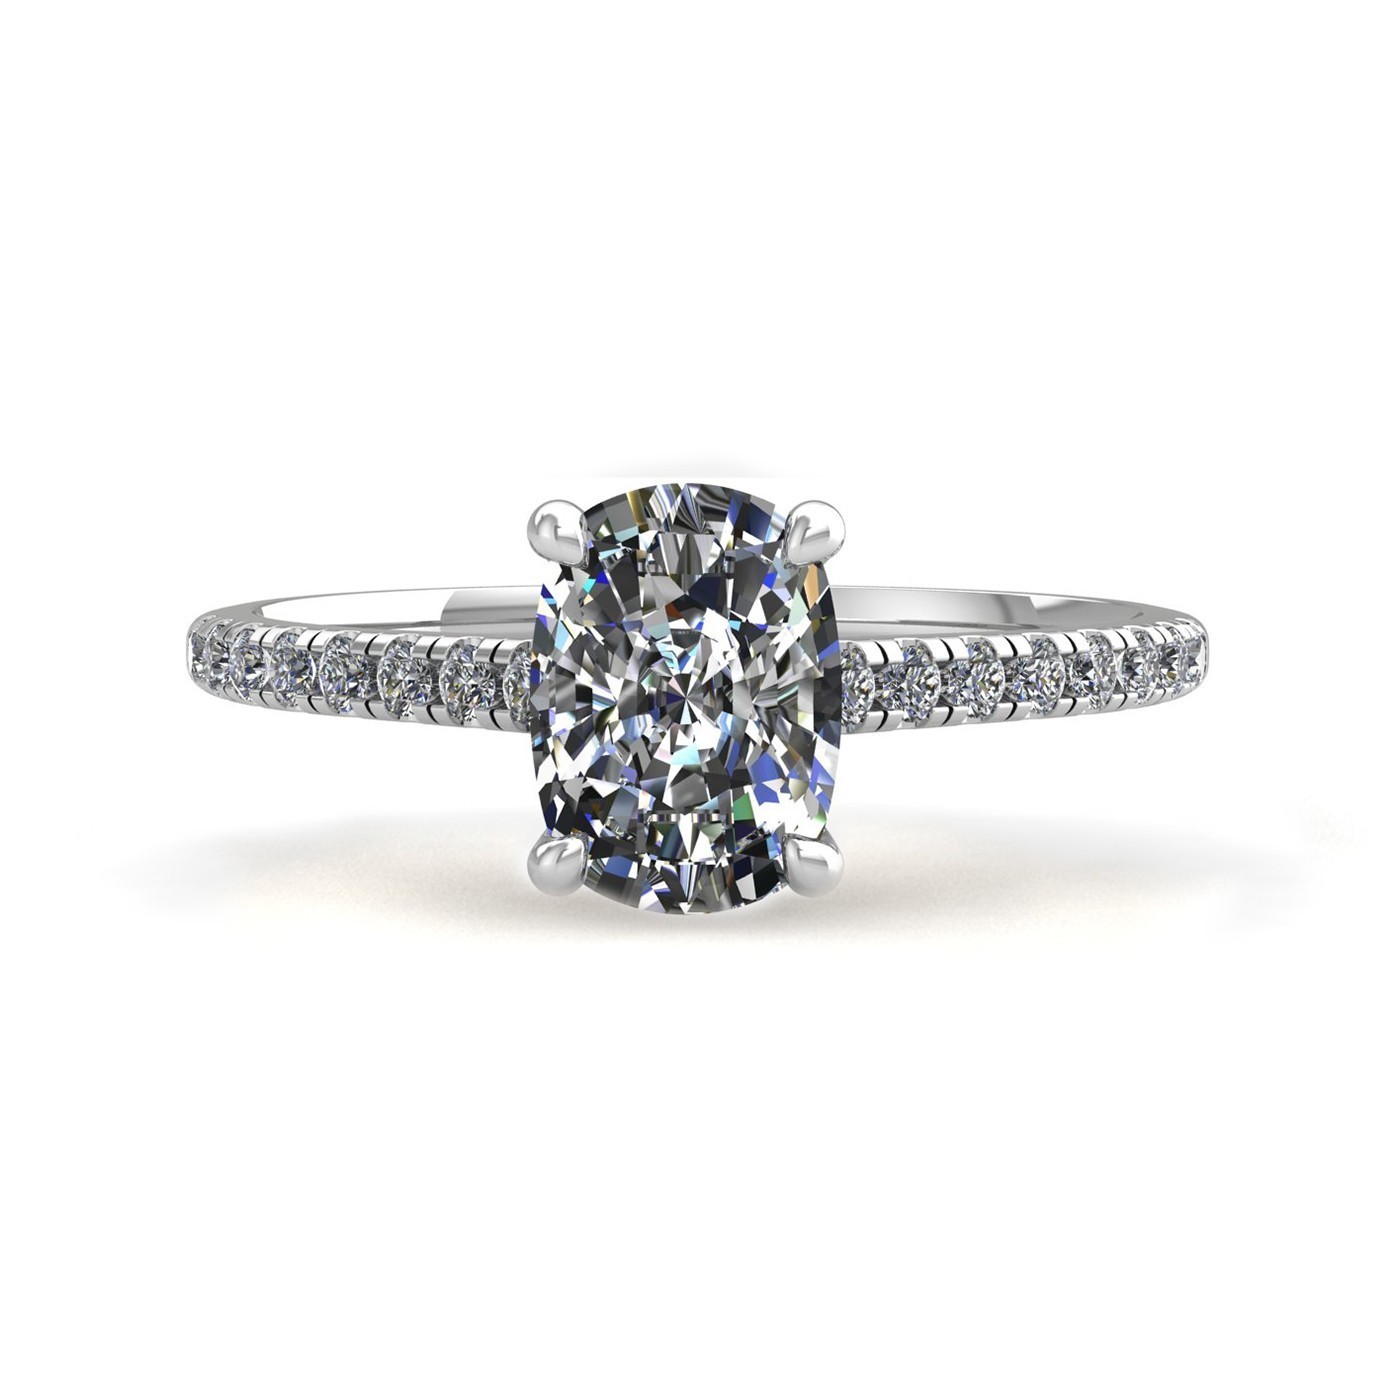 18k white gold  4 prongs elongated cushion cut diamond engagement ring with whisper thin pavÉ set band Photos & images